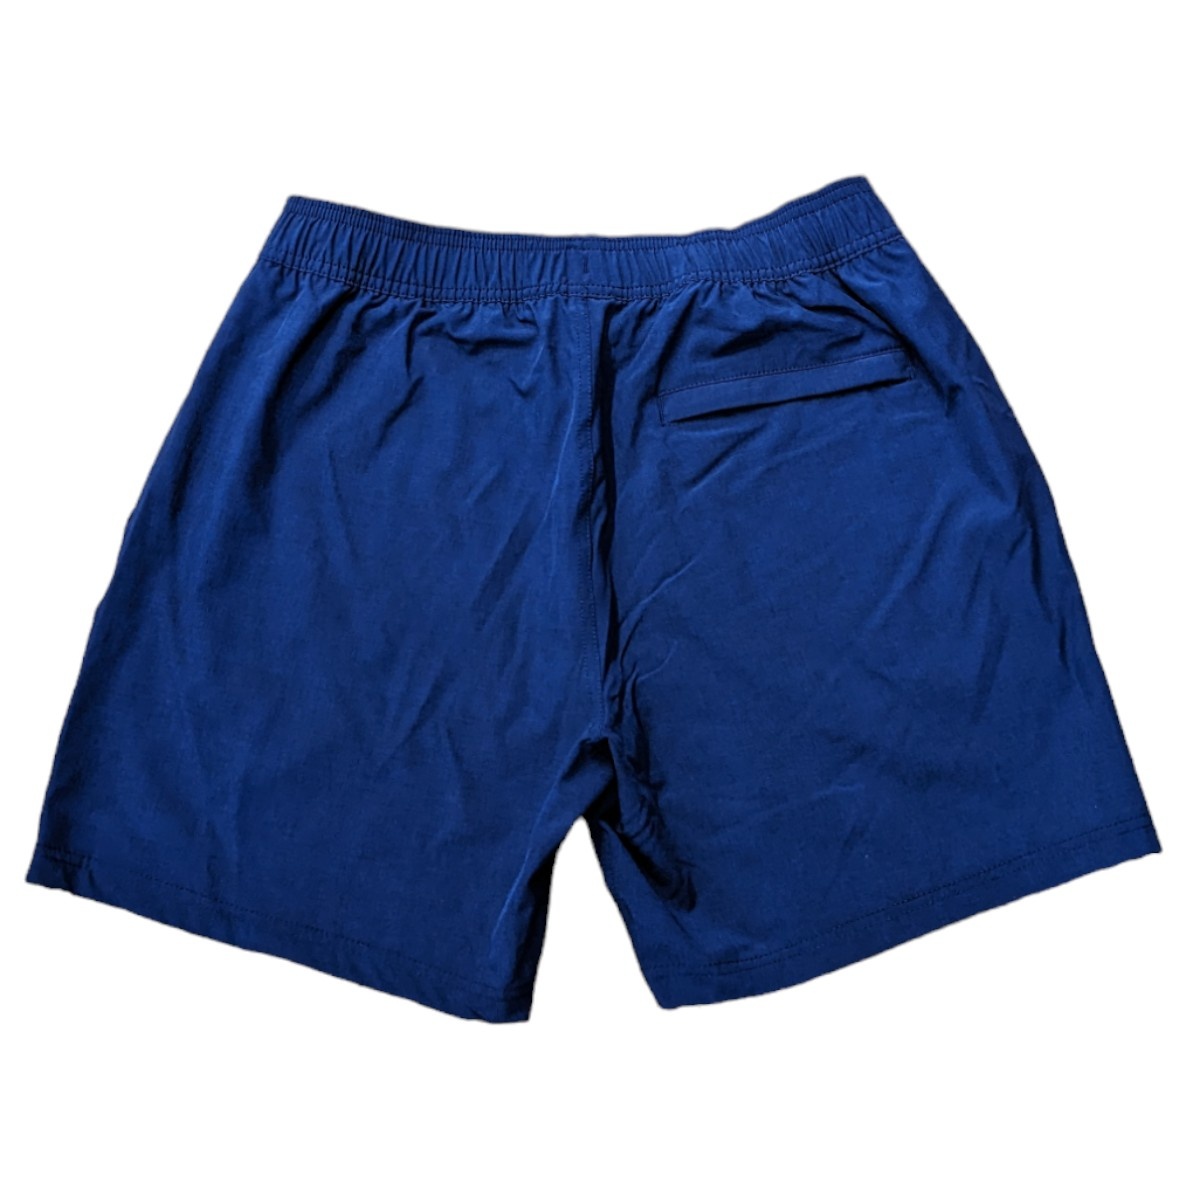 UCLA Bruin Men's Shorts and Pants